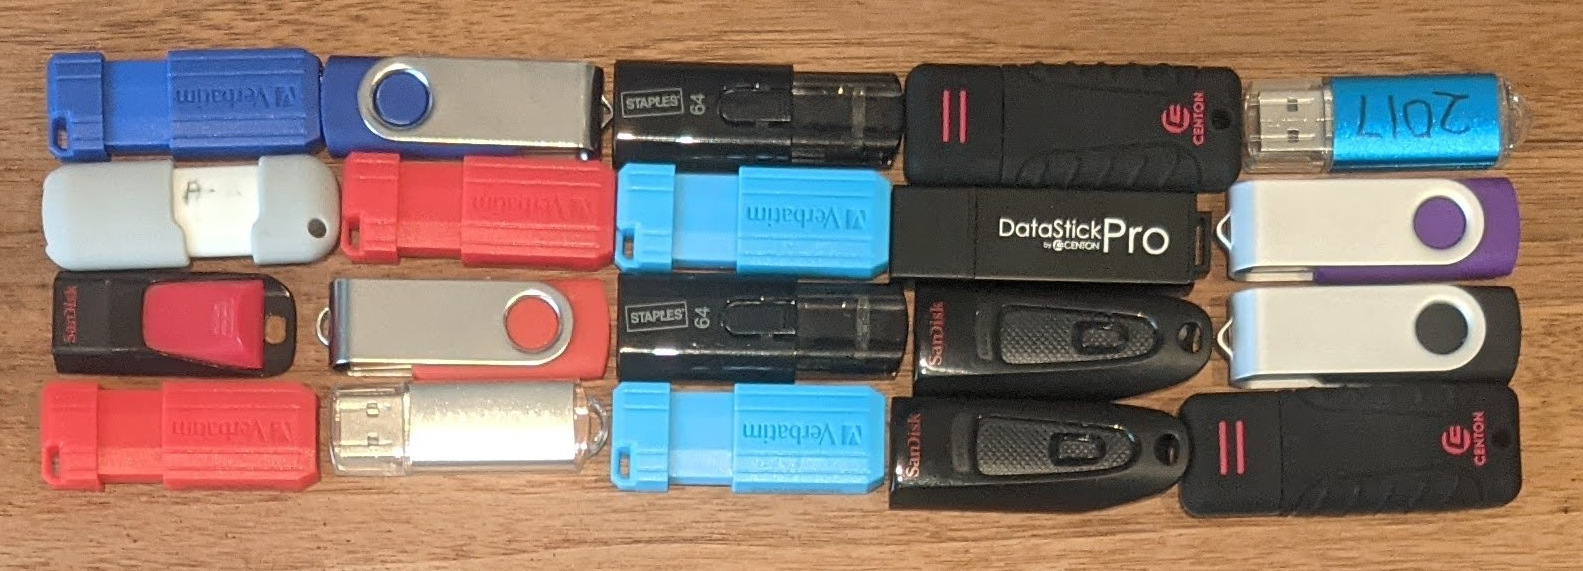 A 4×5 grid of neatly arranged USB thumbdrives